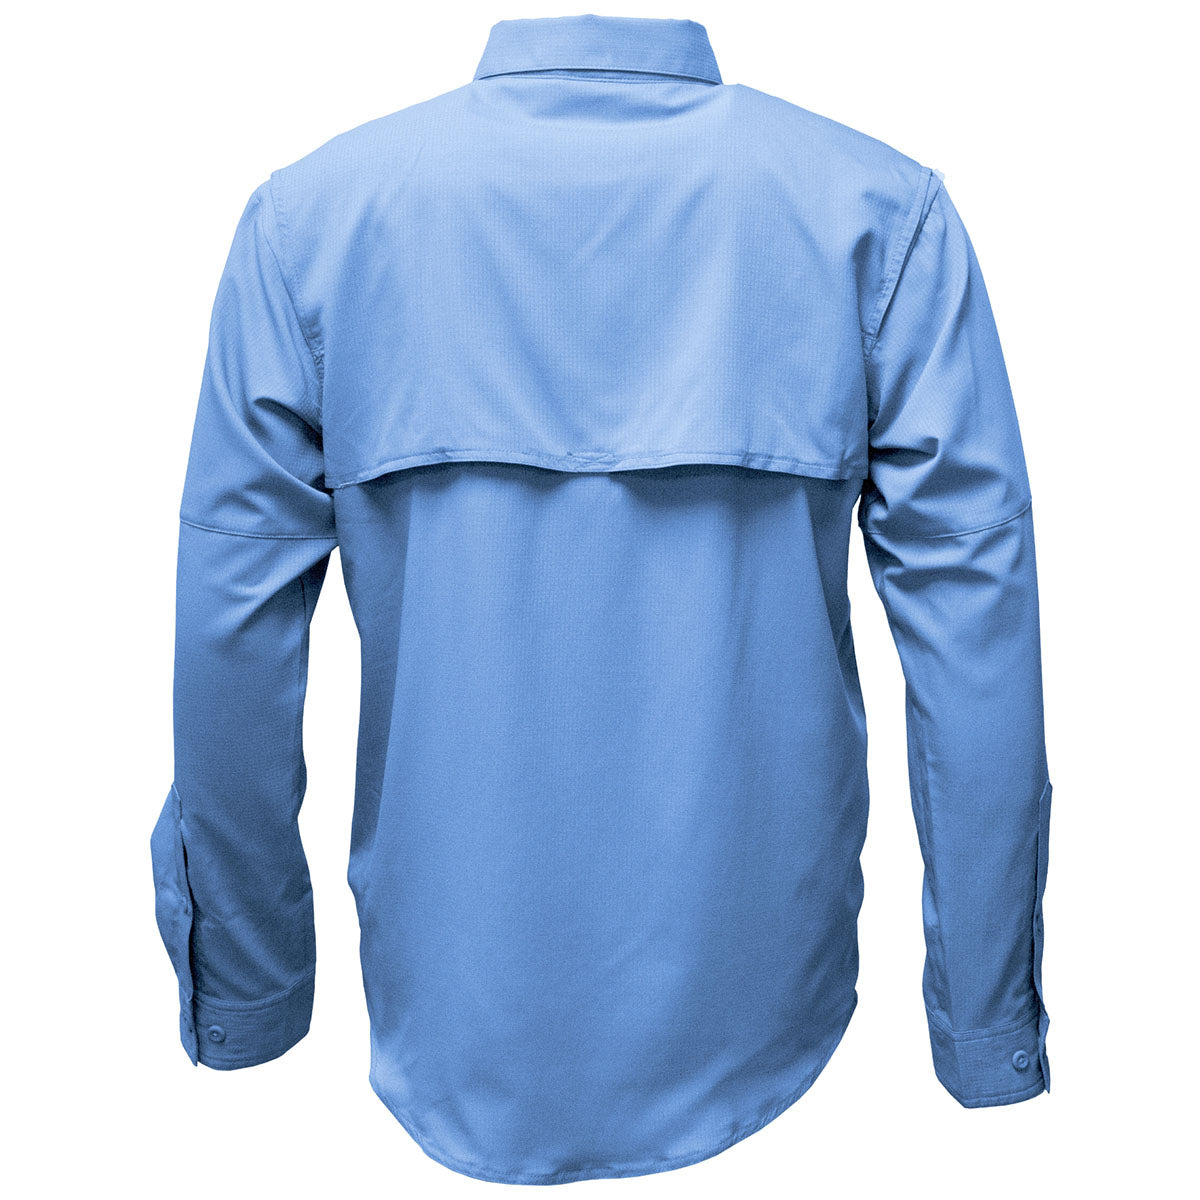 BAW Men's Sky Blue Long Sleve Fishing Shirt - Sample